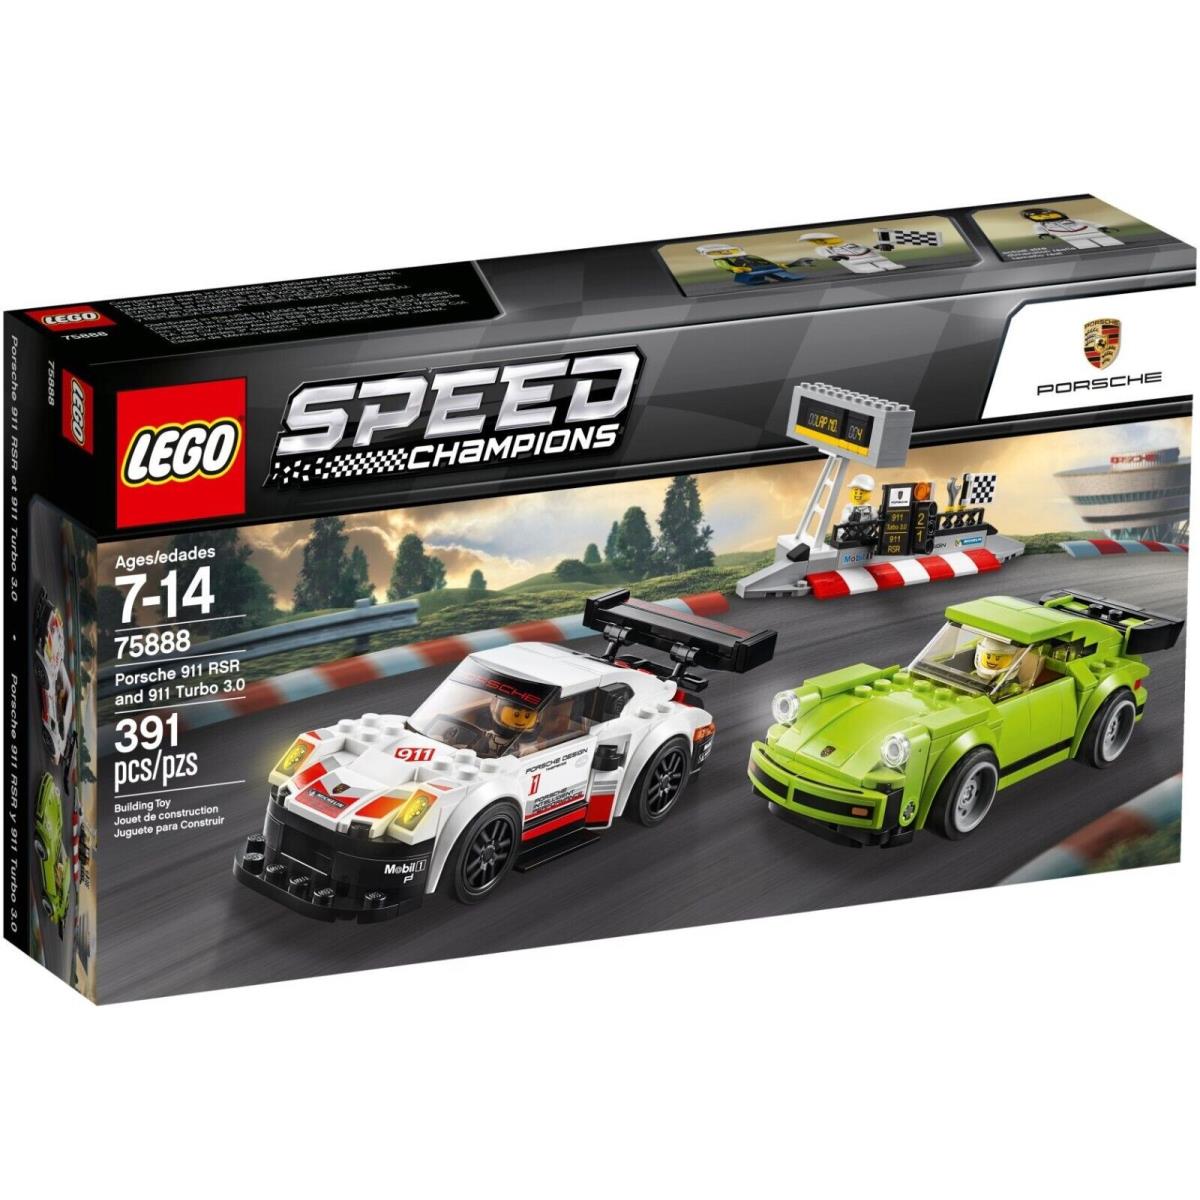 Lego Speed Champions 75888 - Porsche 911 Rsr and 911 Turbo 3.0